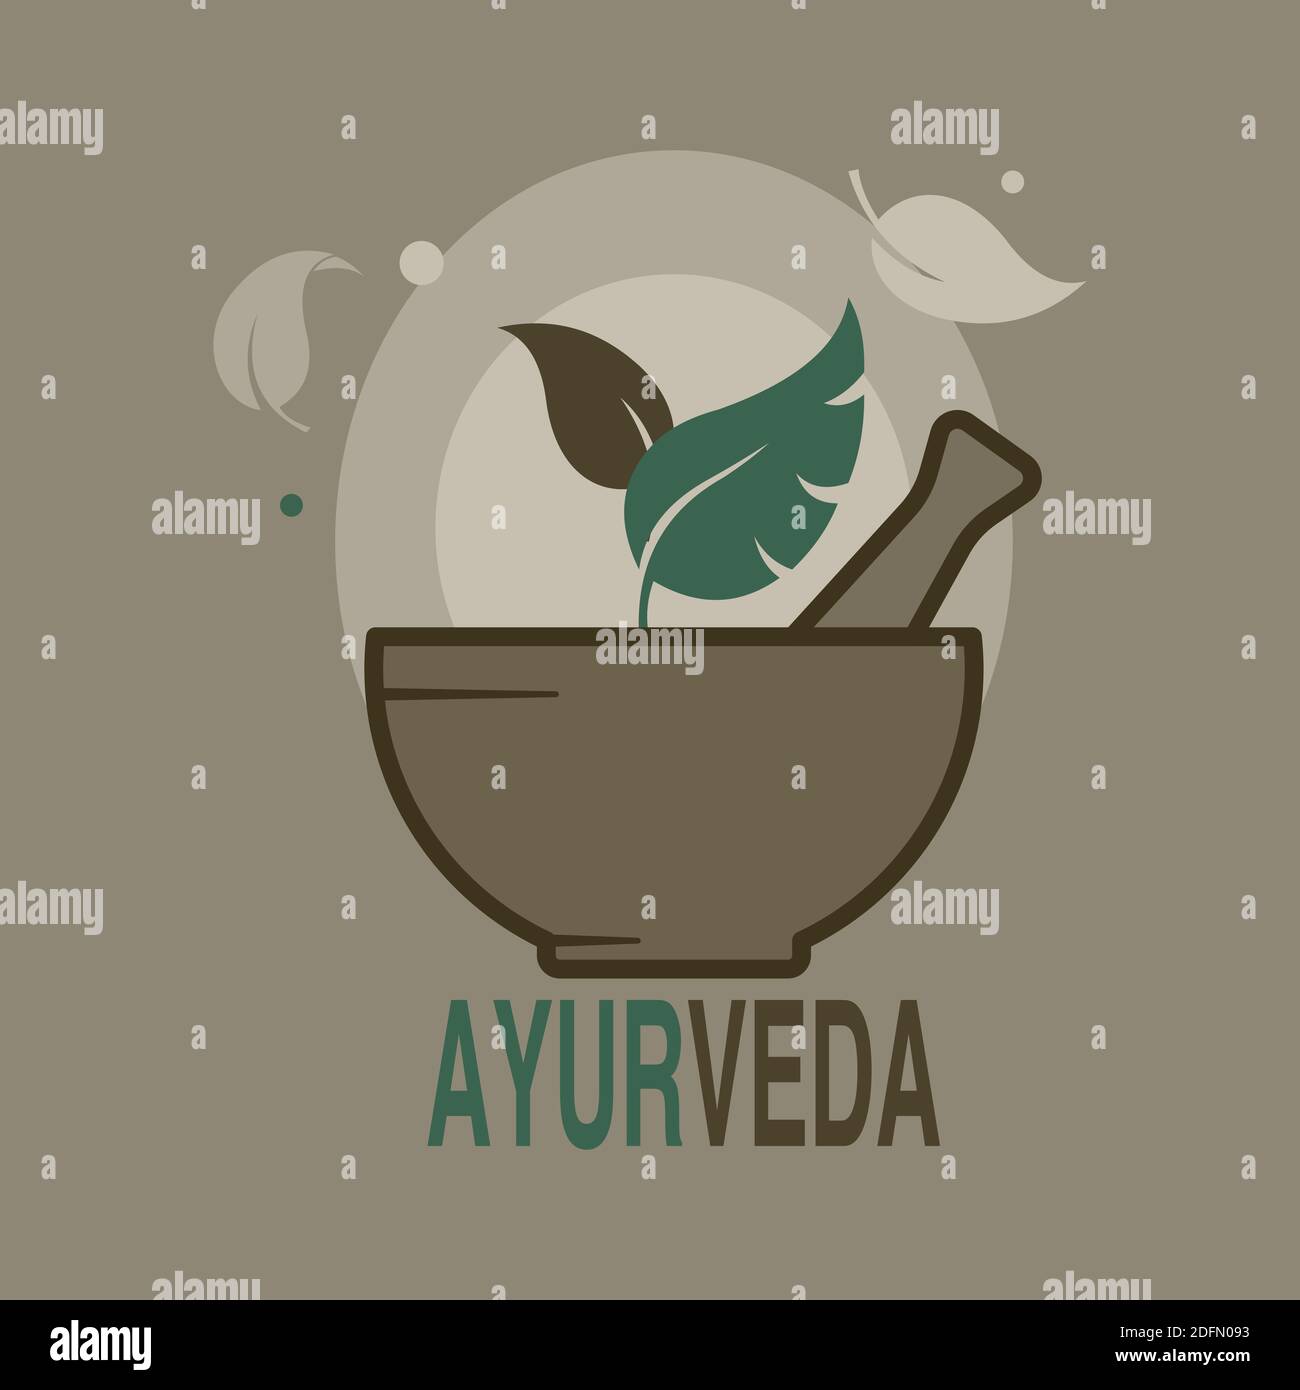 Ayurvedic Medicine Crusher. Mortar and pestle with text AYURVEDA. Alternative medicine concept. Flat style illustration. Stock Vector